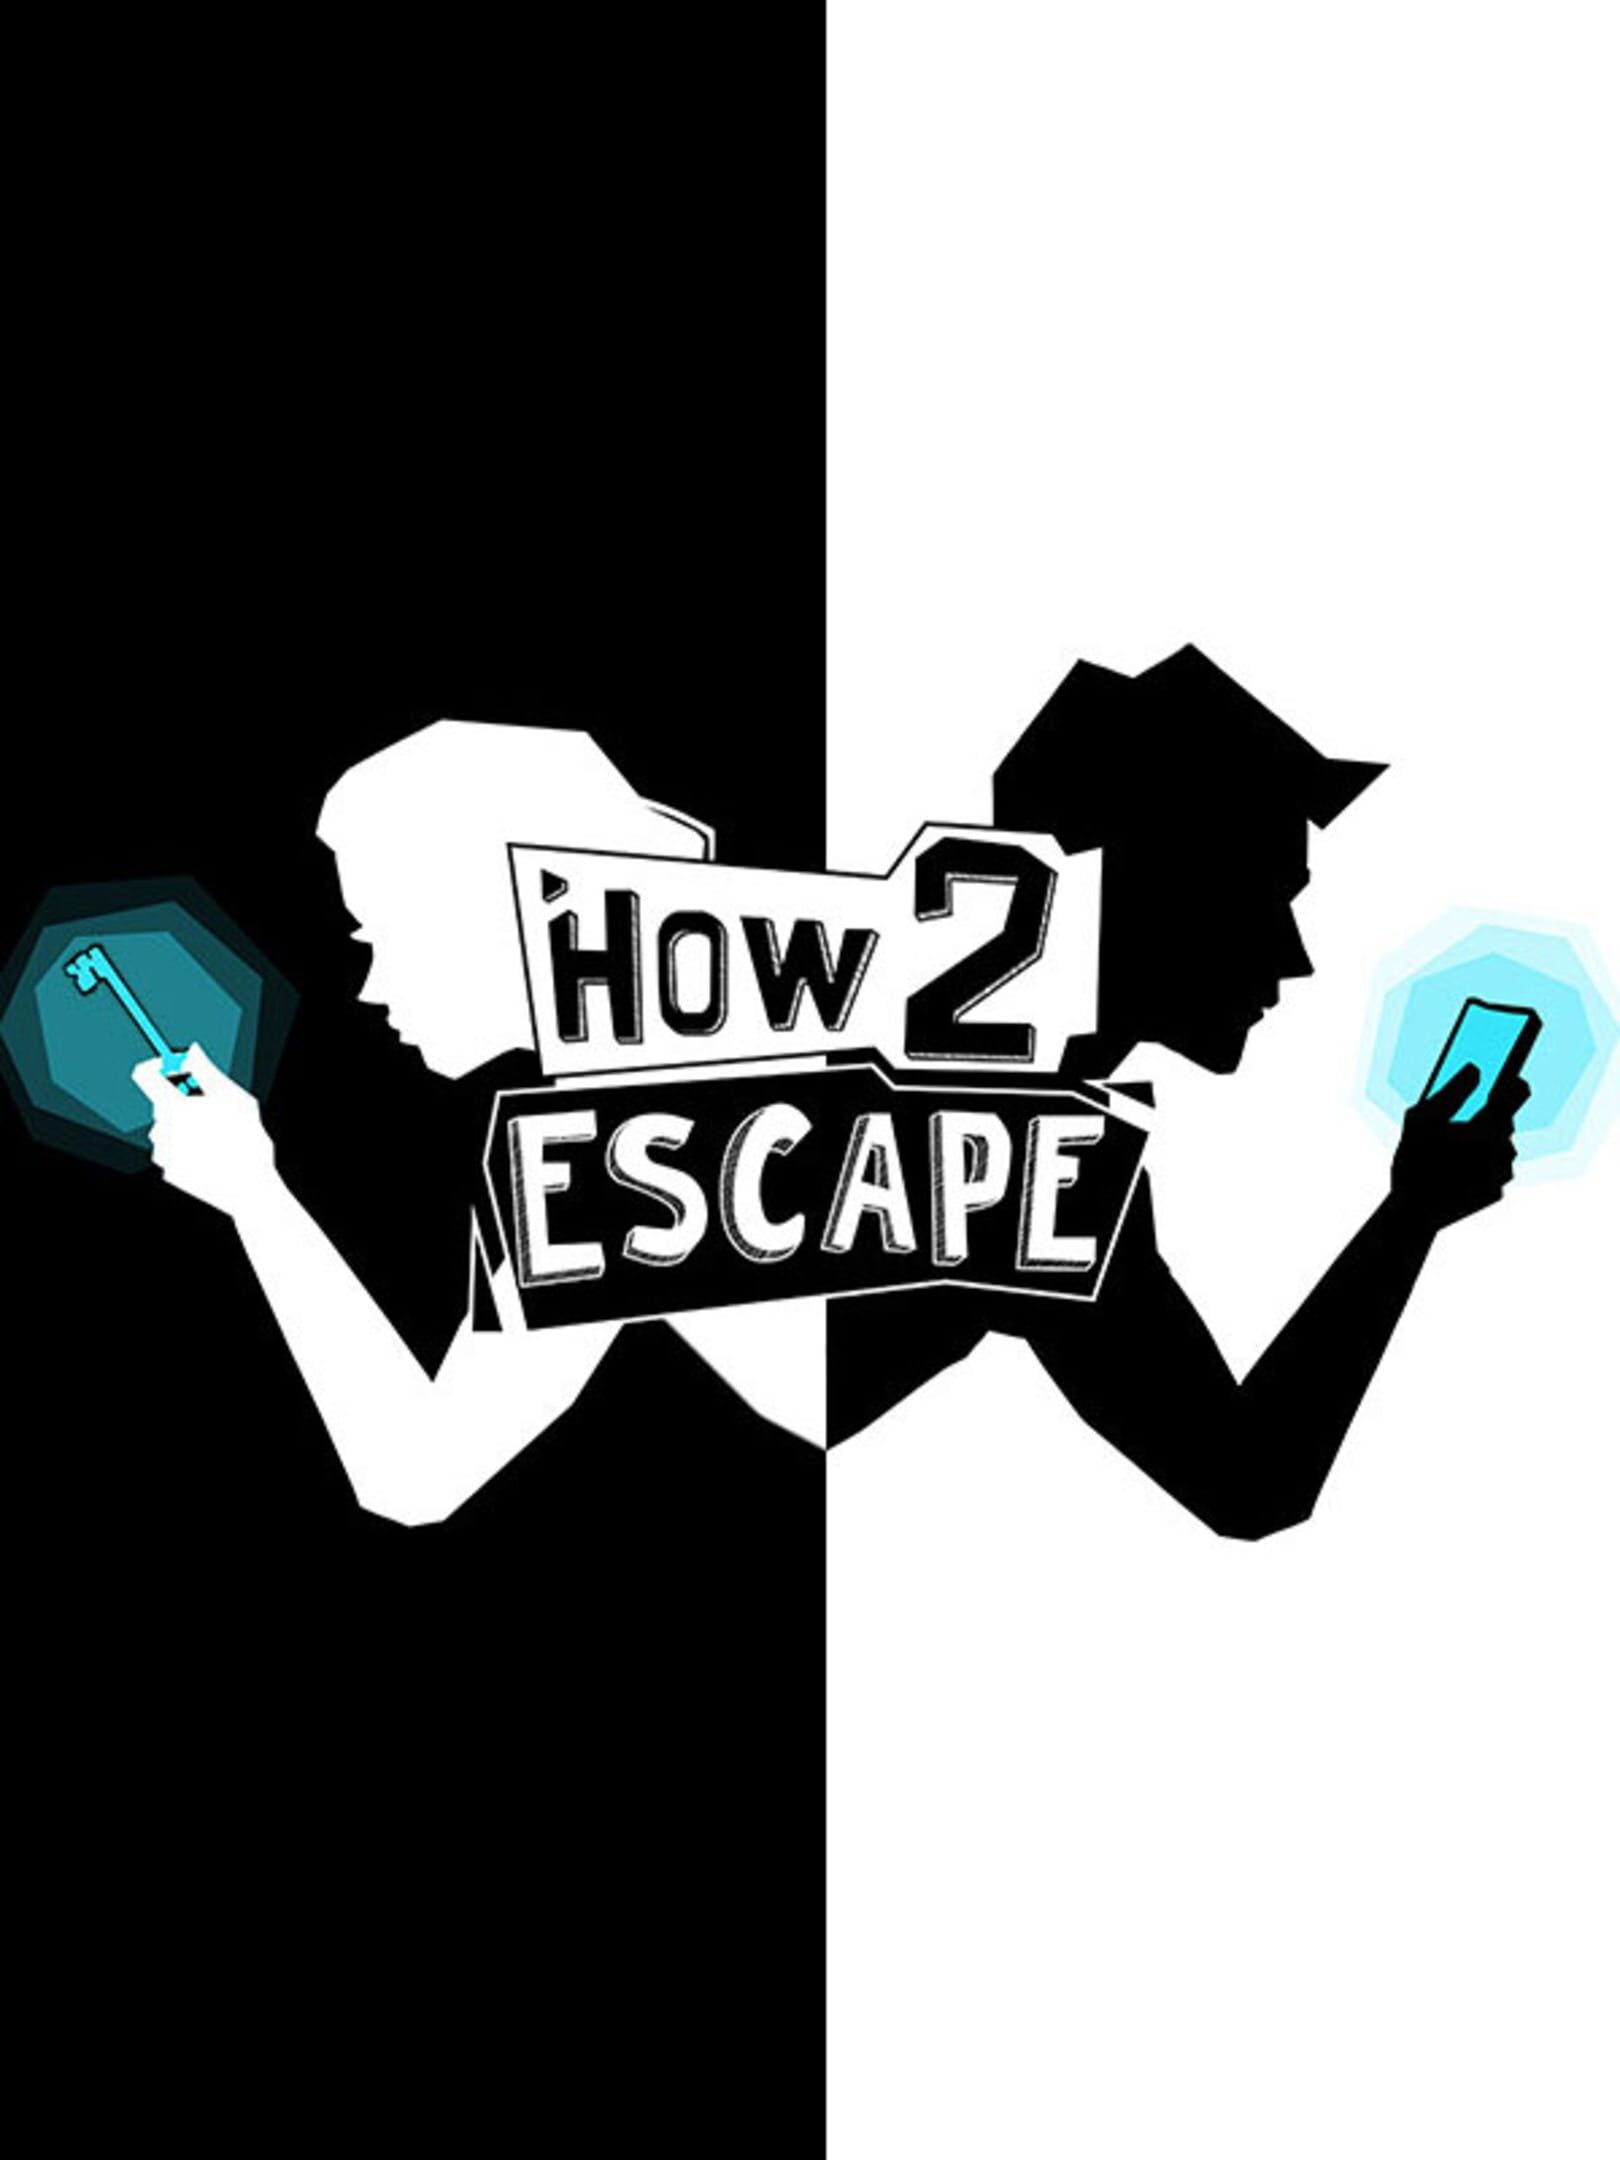 How 2 Escape | Stash - Games tracker